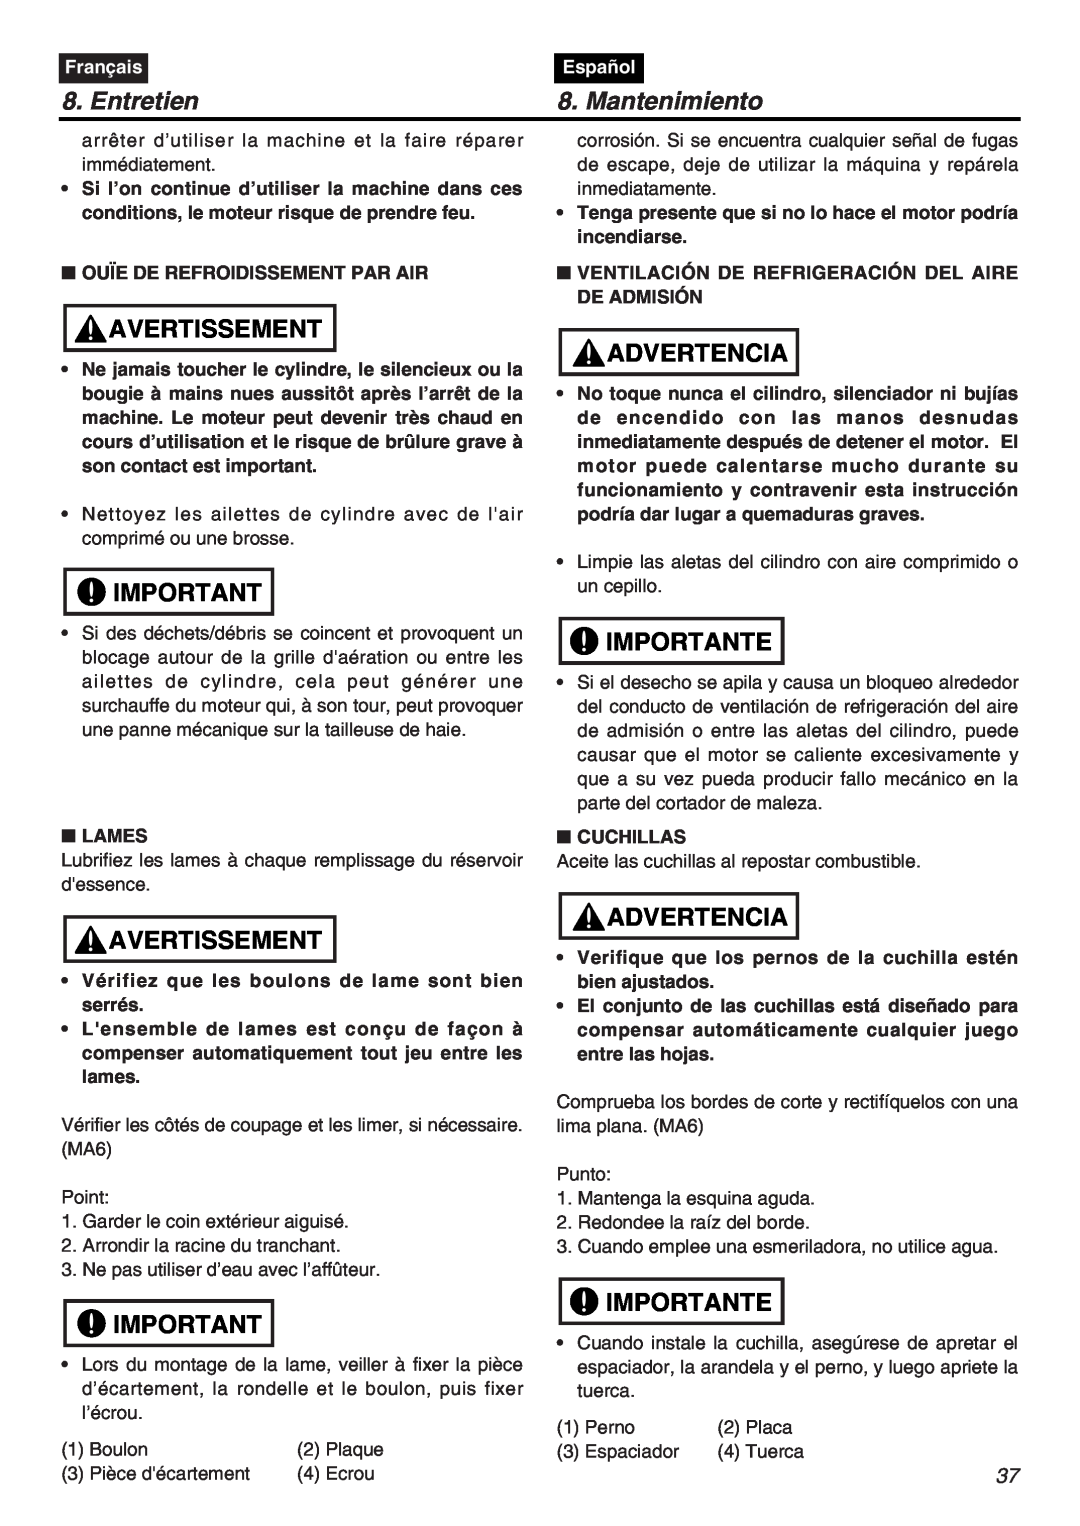 RedMax HTZ2401-CA, HTZ2401L-CA manual Entretien, Mantenimiento, Avertissement, Advertencia, Importante, Français, Español 